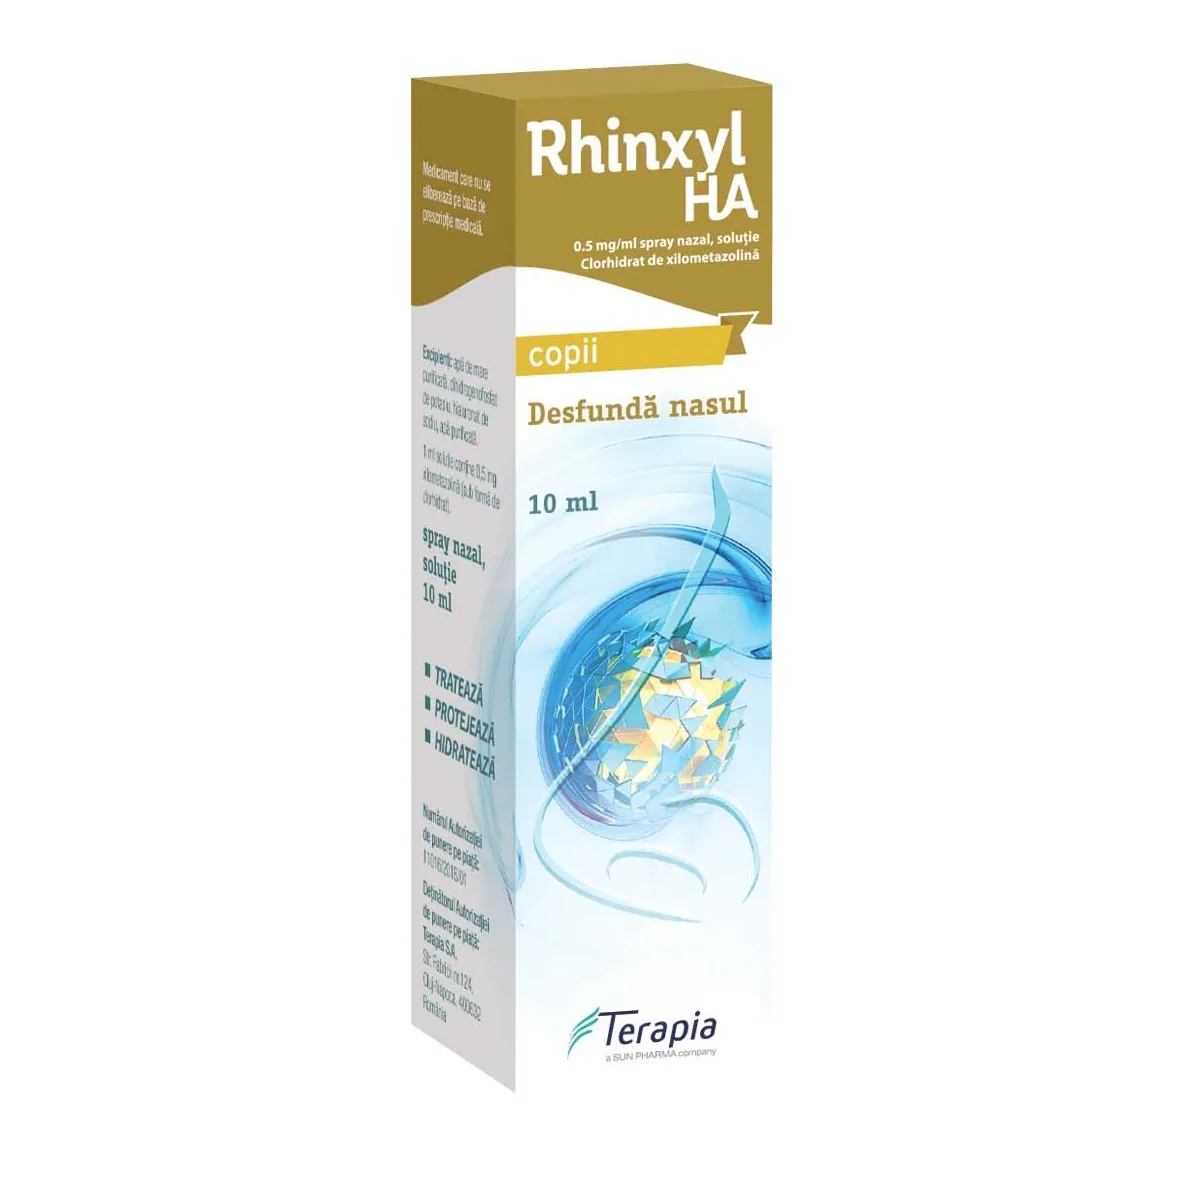 Rhinxyl Ha Copii 0.05% spray nazal, 10ml, Terapia